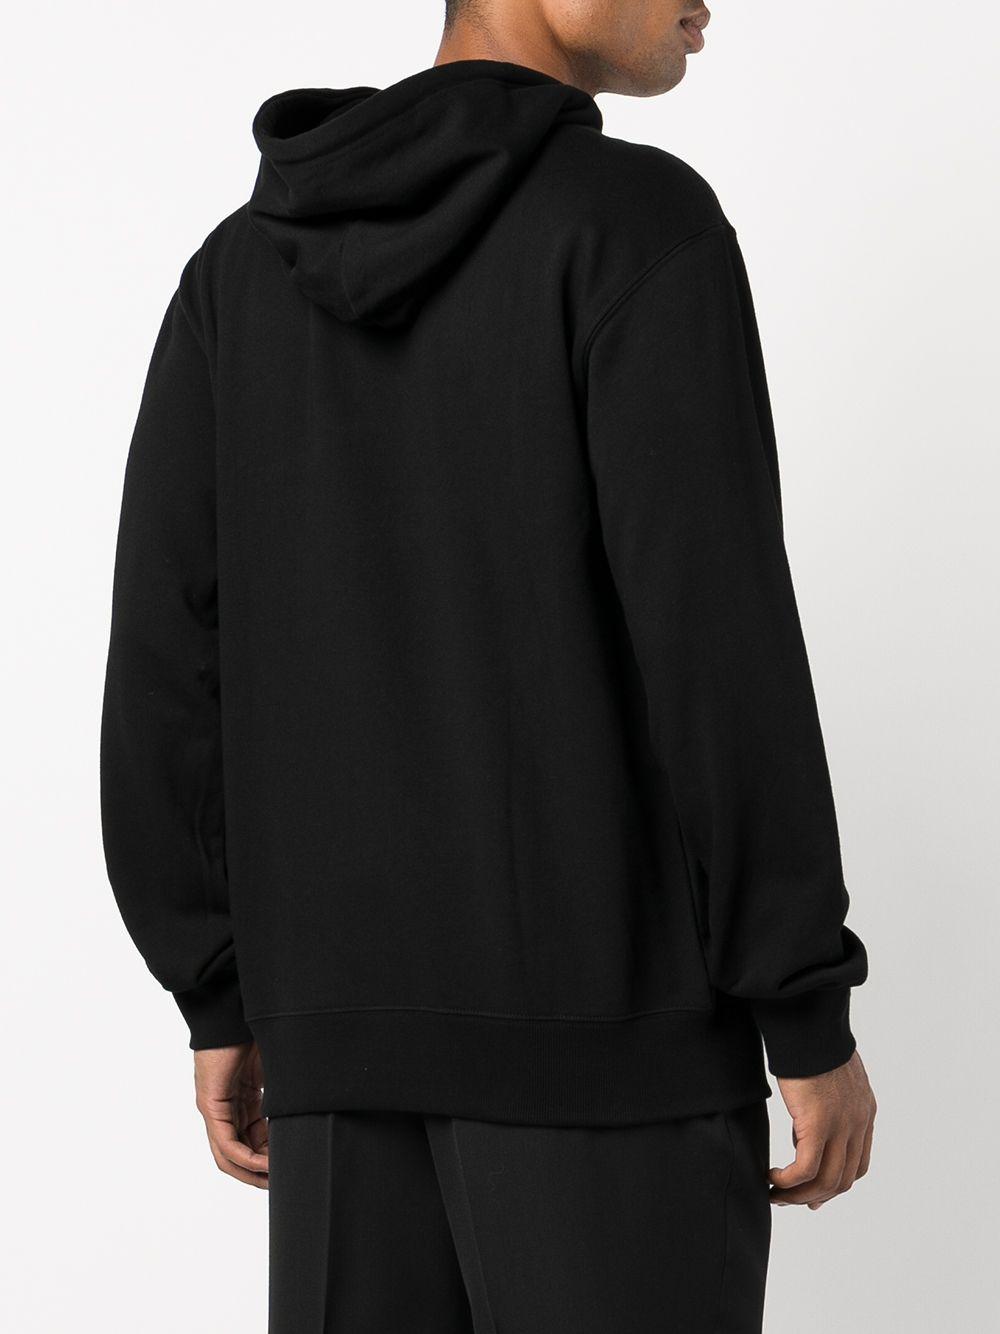 Yohji Yamamoto X New Era Logo Hoodie in Black for Men | Lyst